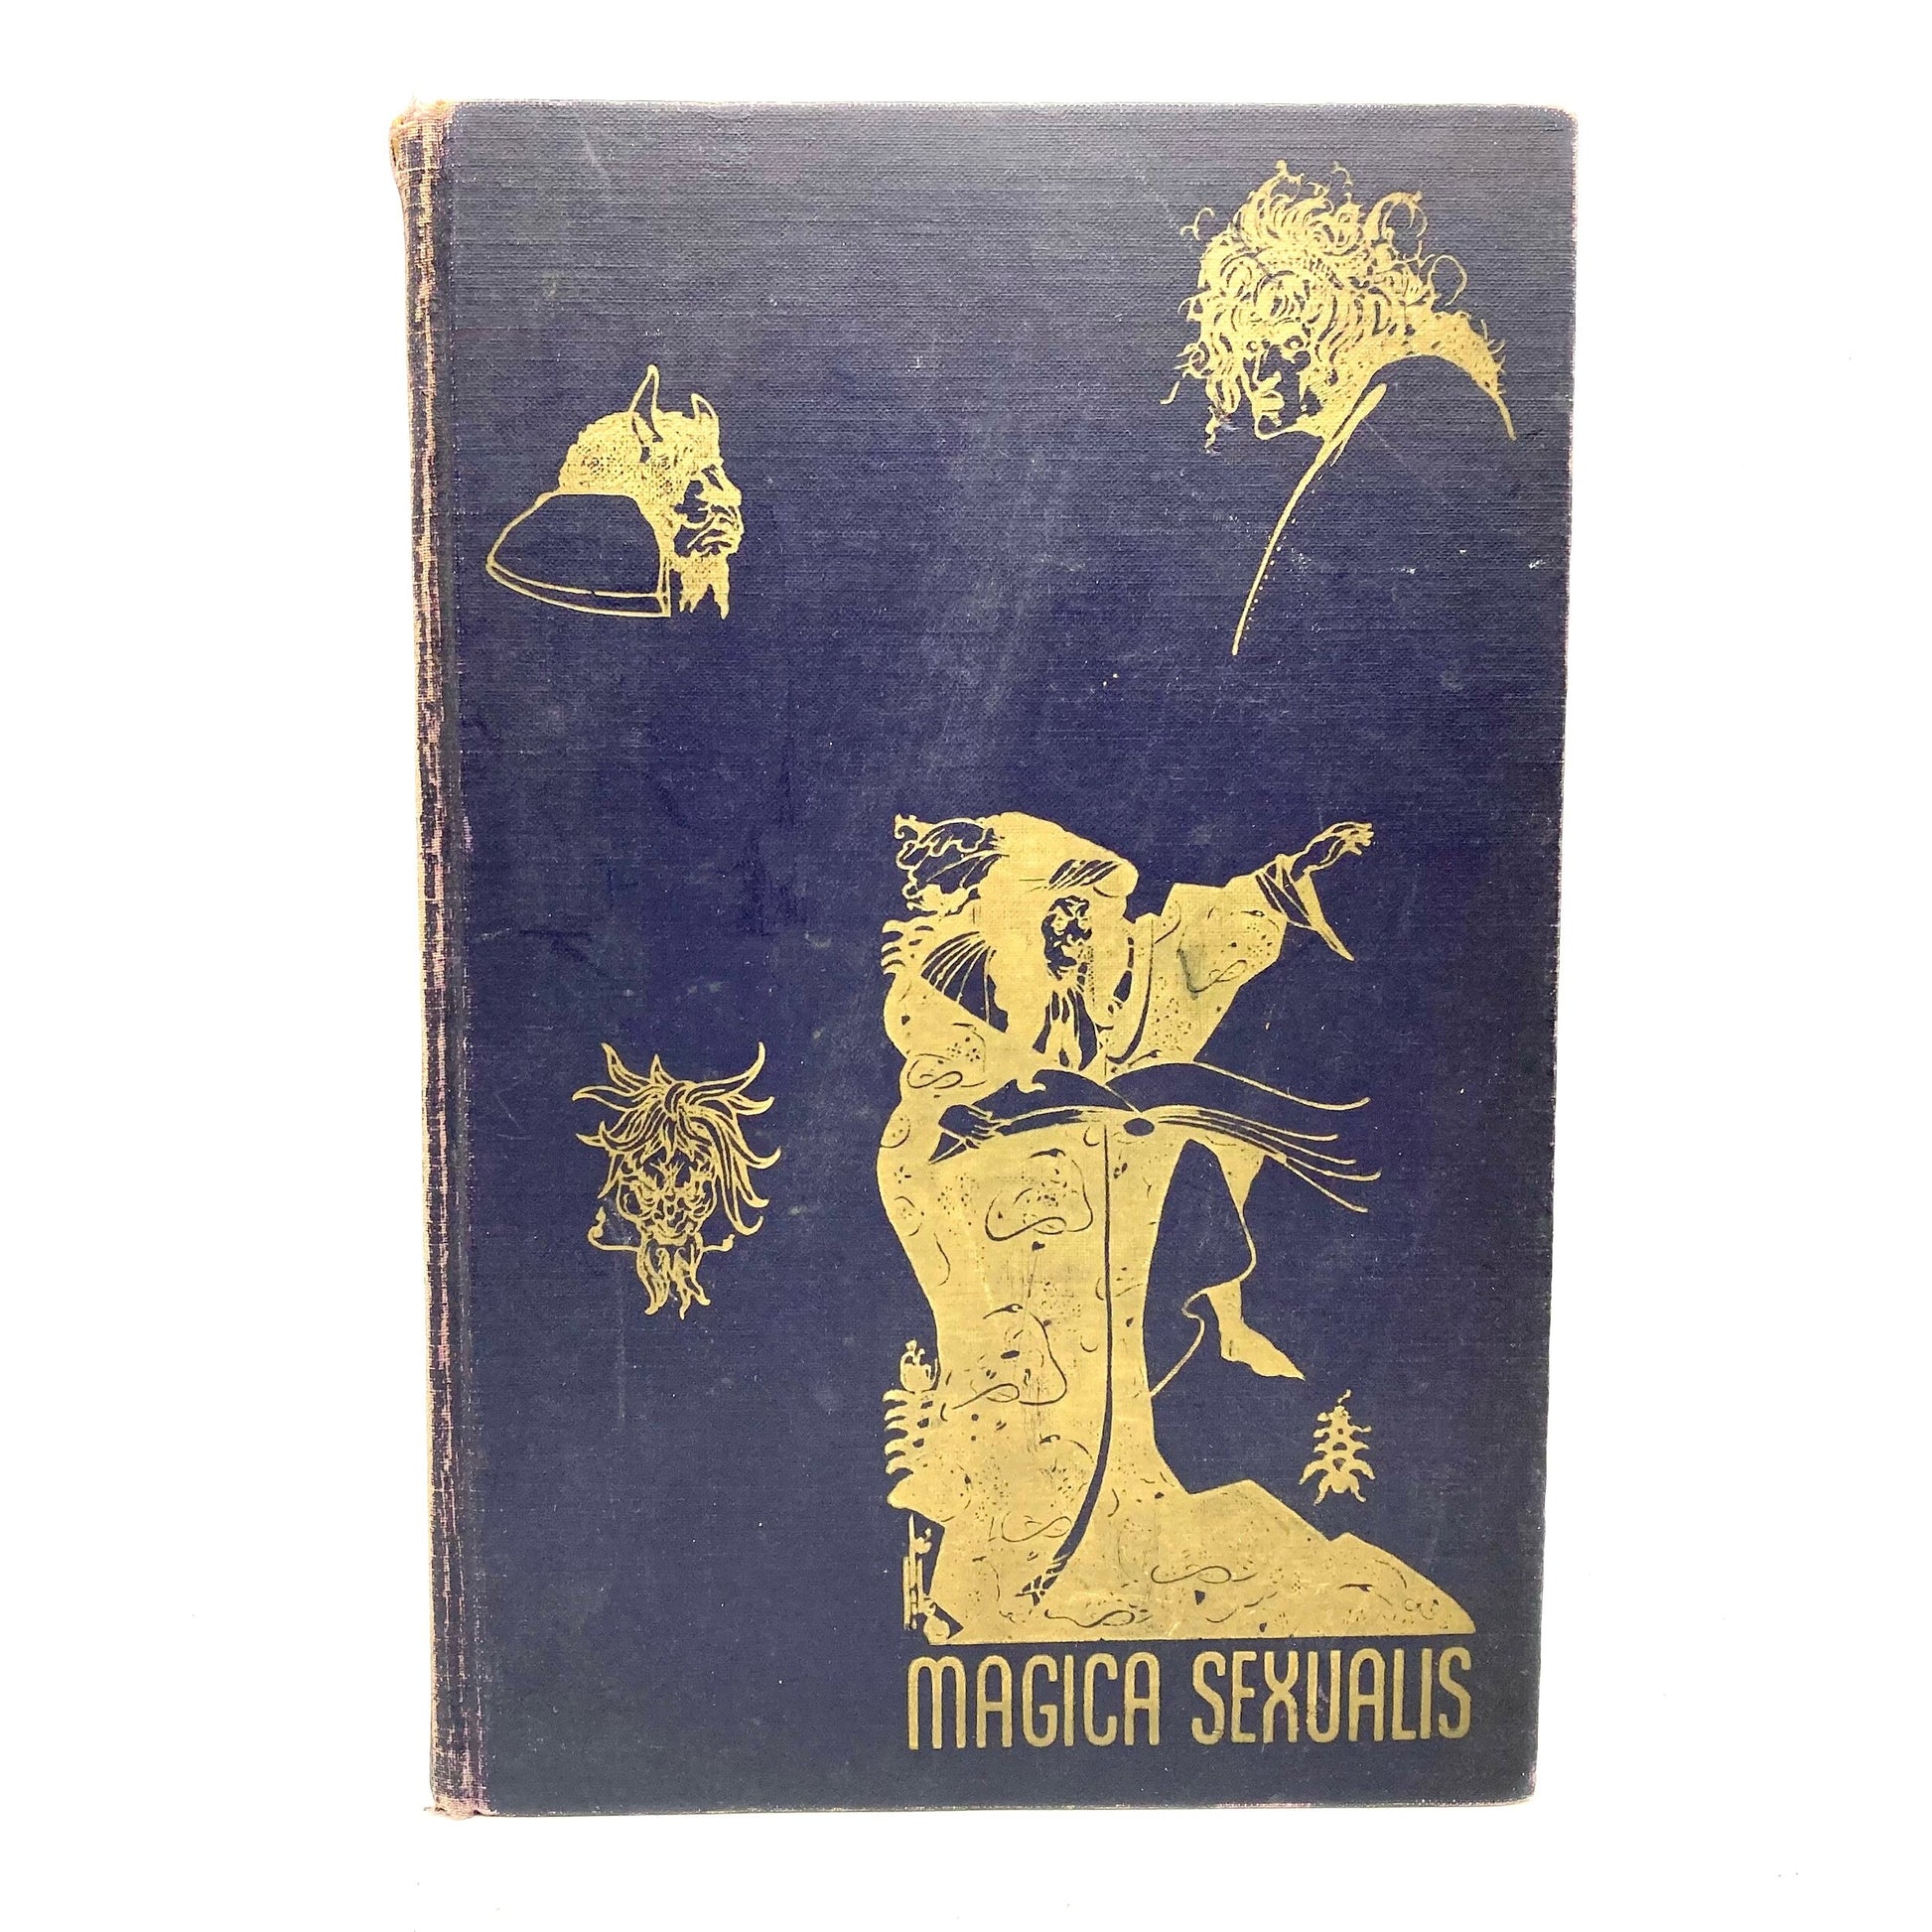 LAURENT, Emile and NAGOUR, Paul "Magica Sexualis" [Falstaff Press, 1934] - Buzz Bookstore